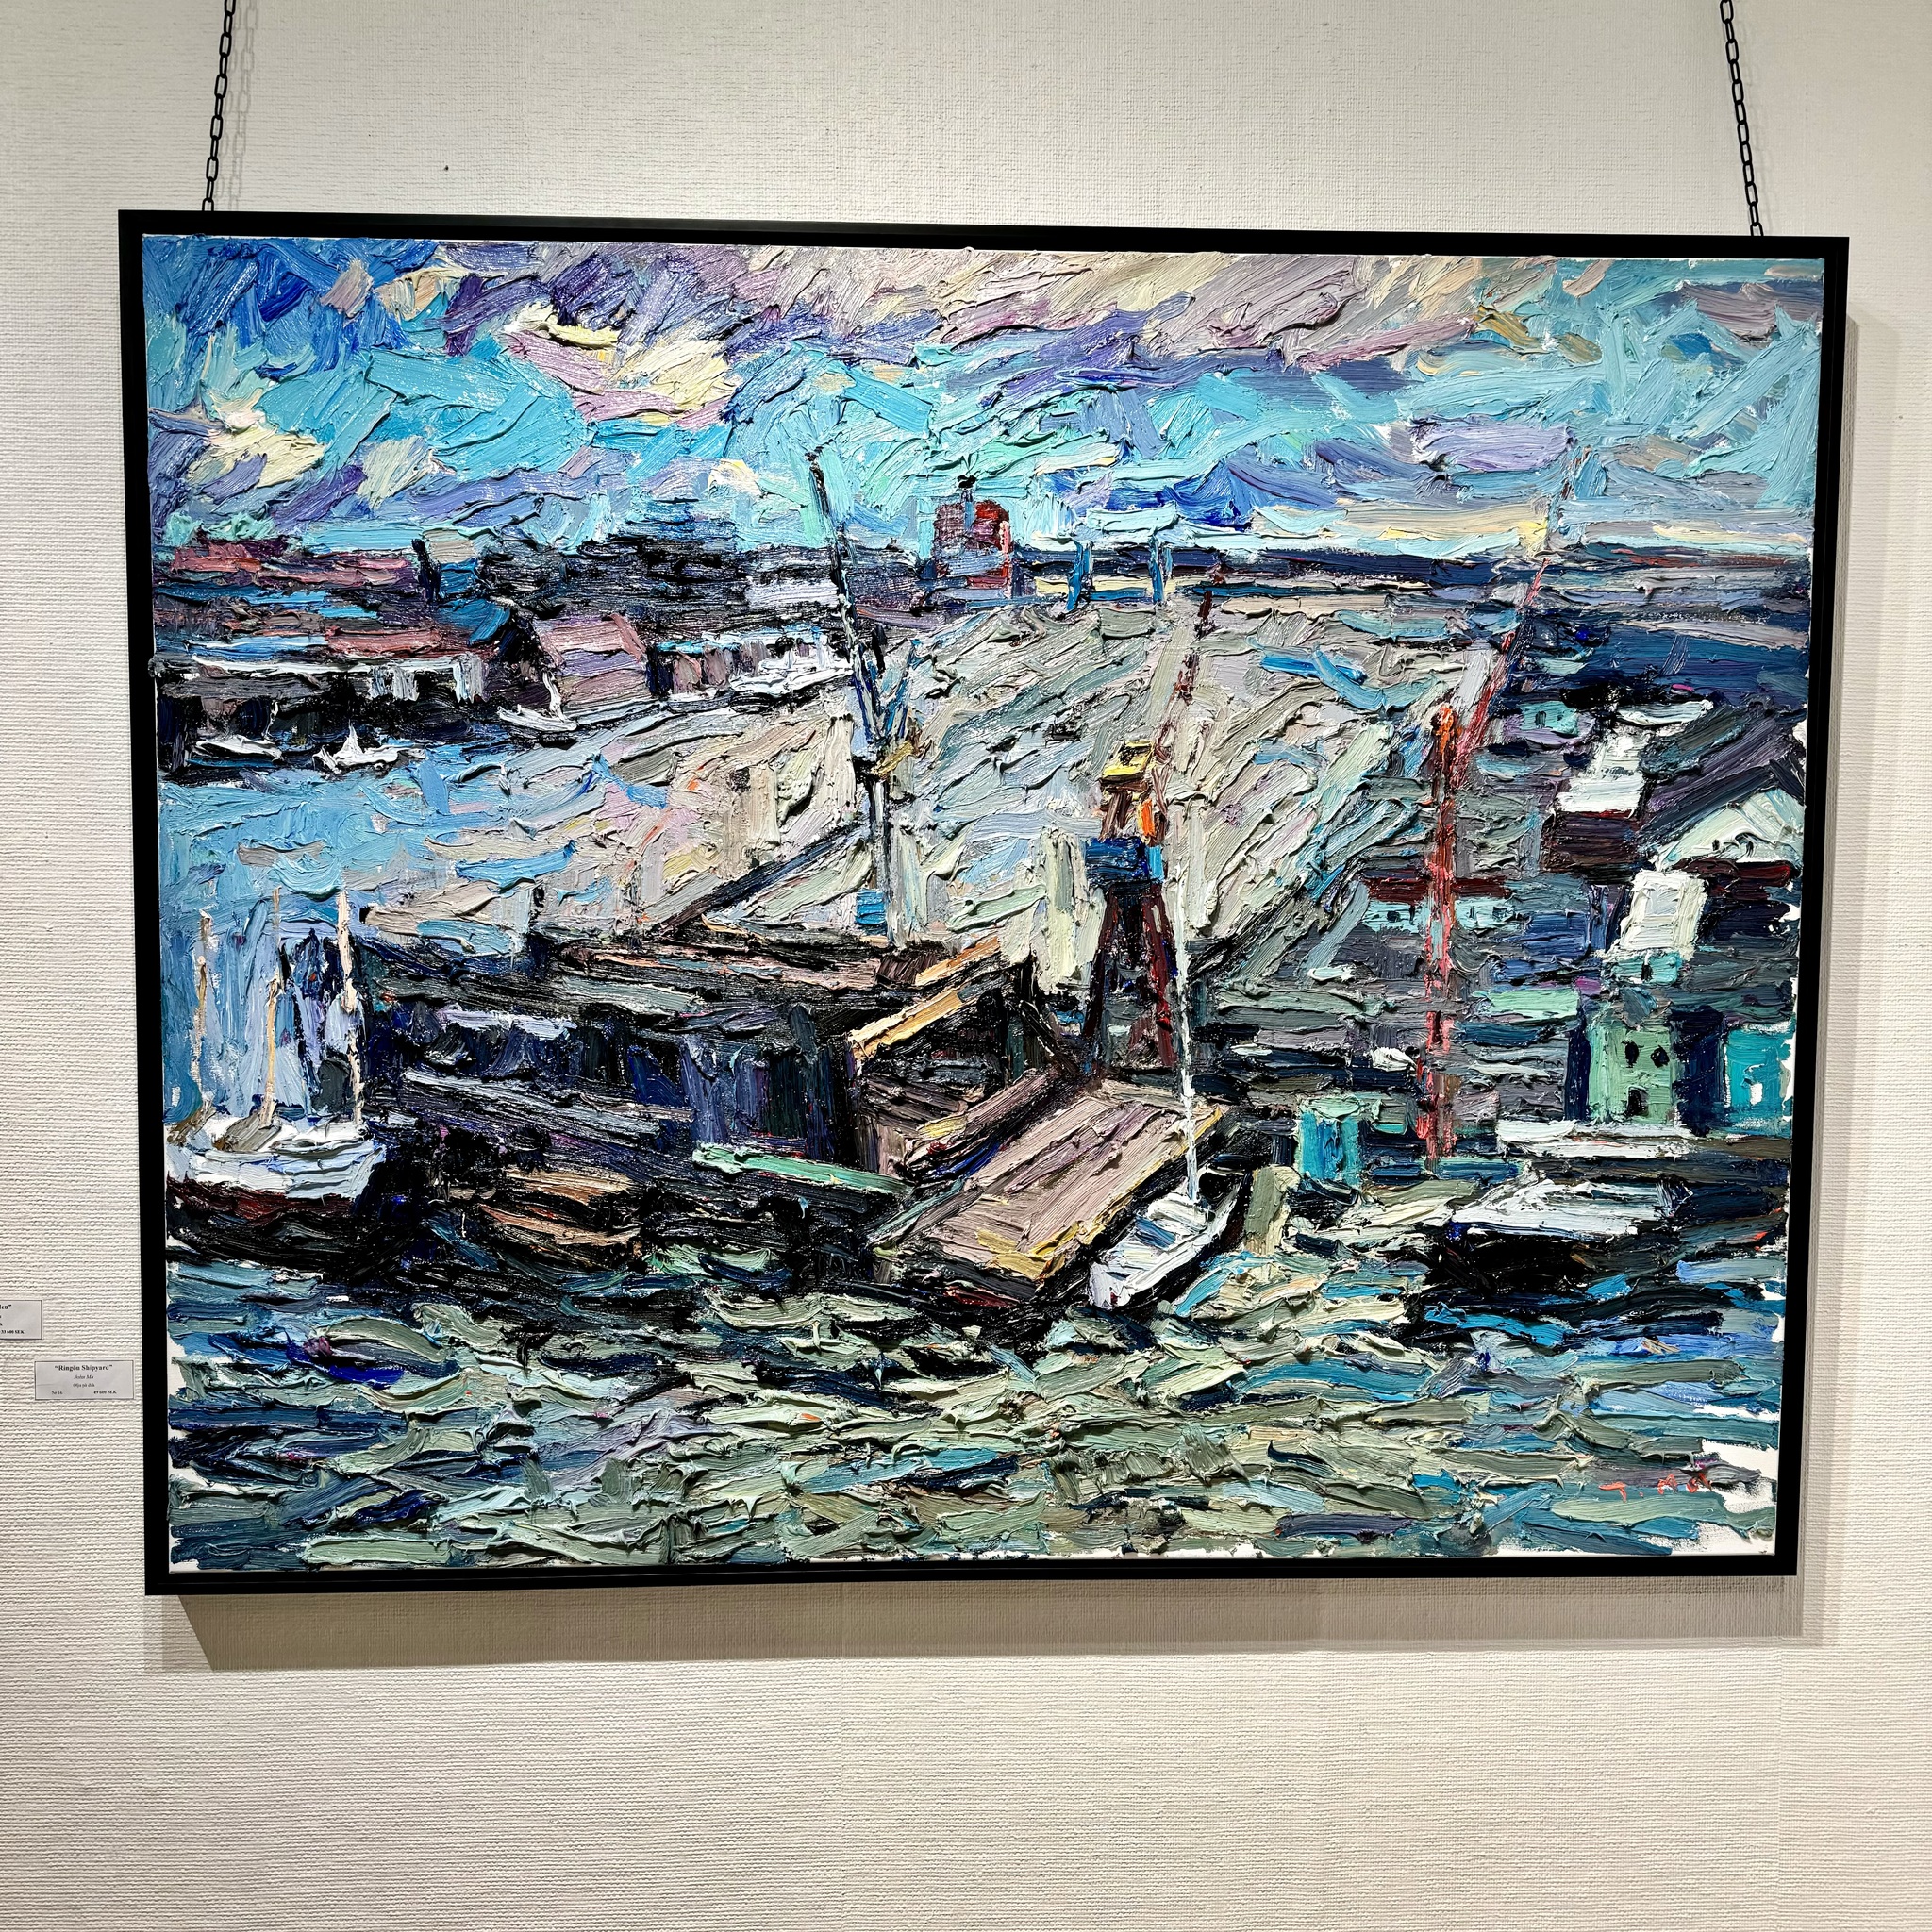 16. "Ringön Shipyard" Olja på duk av John Ma. 153x124 cm